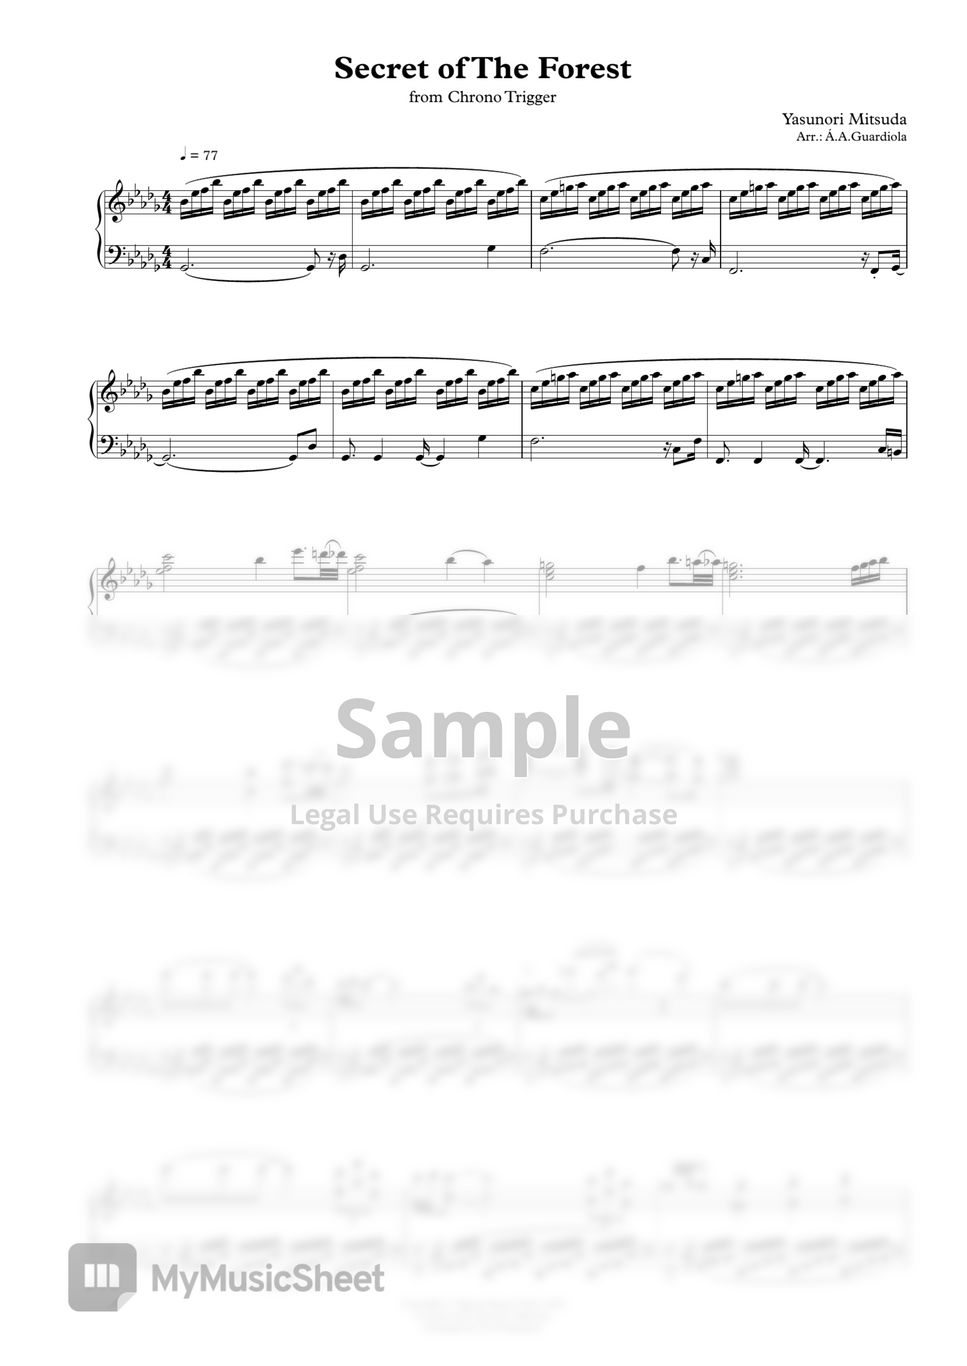 Yasunori Mitsuda - Secret of the Forest piano reduction (advanced) by Á.A.Guardiola